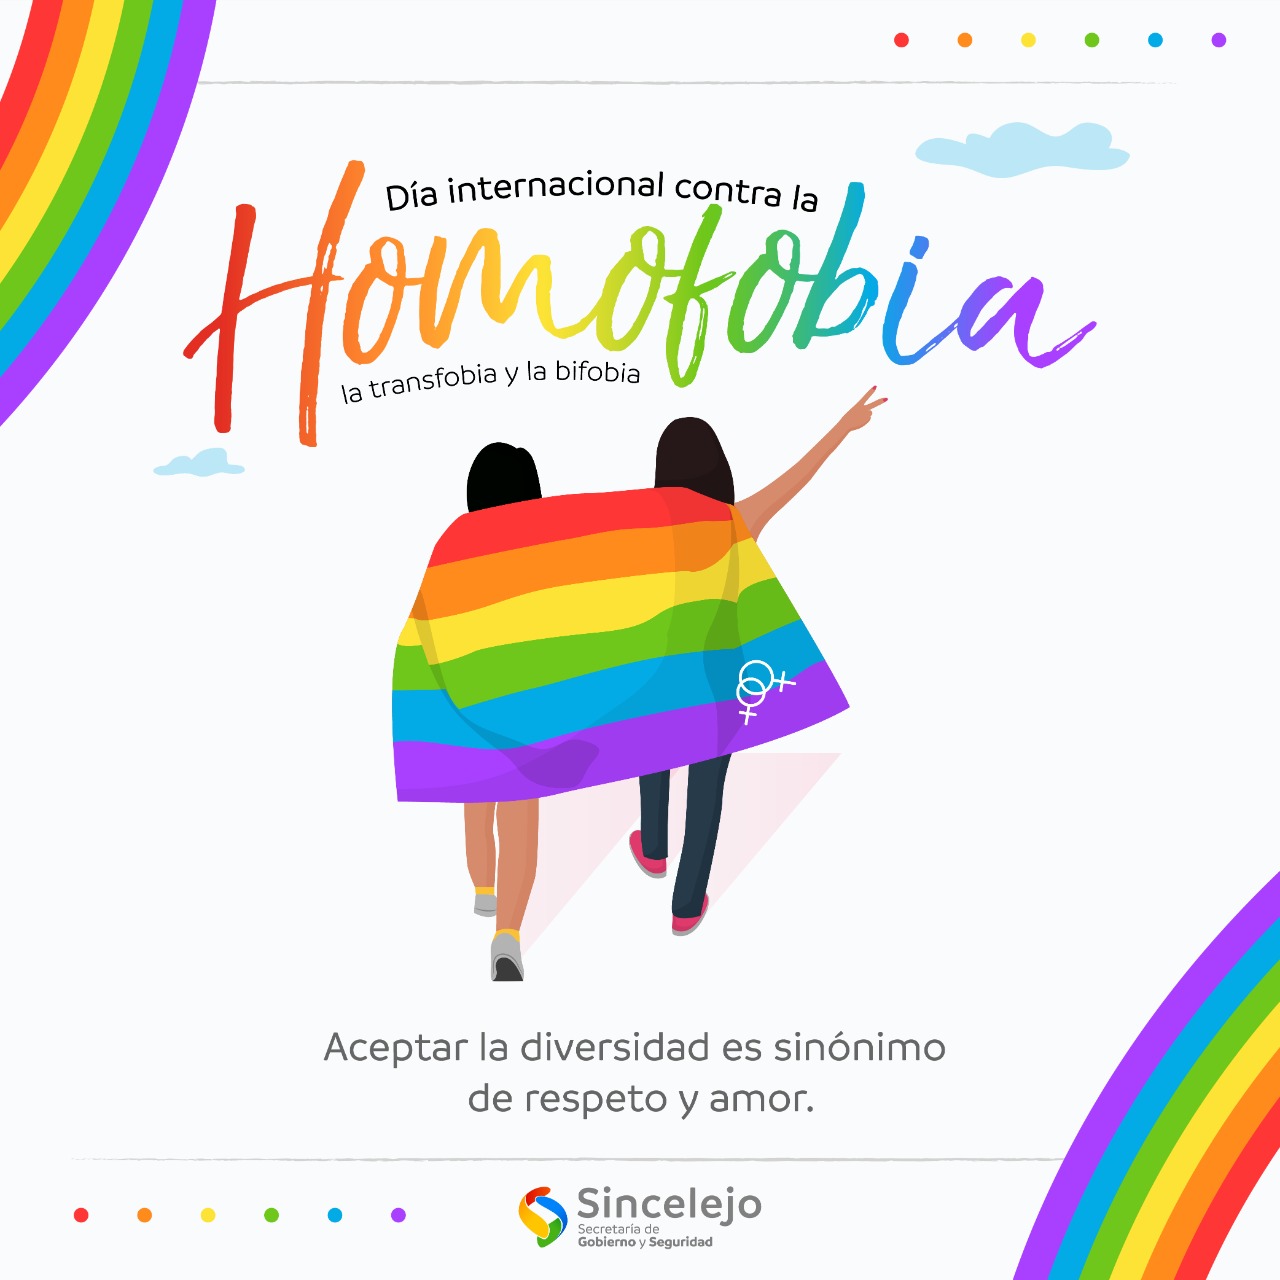   17 de Mayo - Día Internacional contra la Homofobia, Transfobia y Bifobia / May 17 - International Day Against Homophobia, Transphobia and Biphobia 